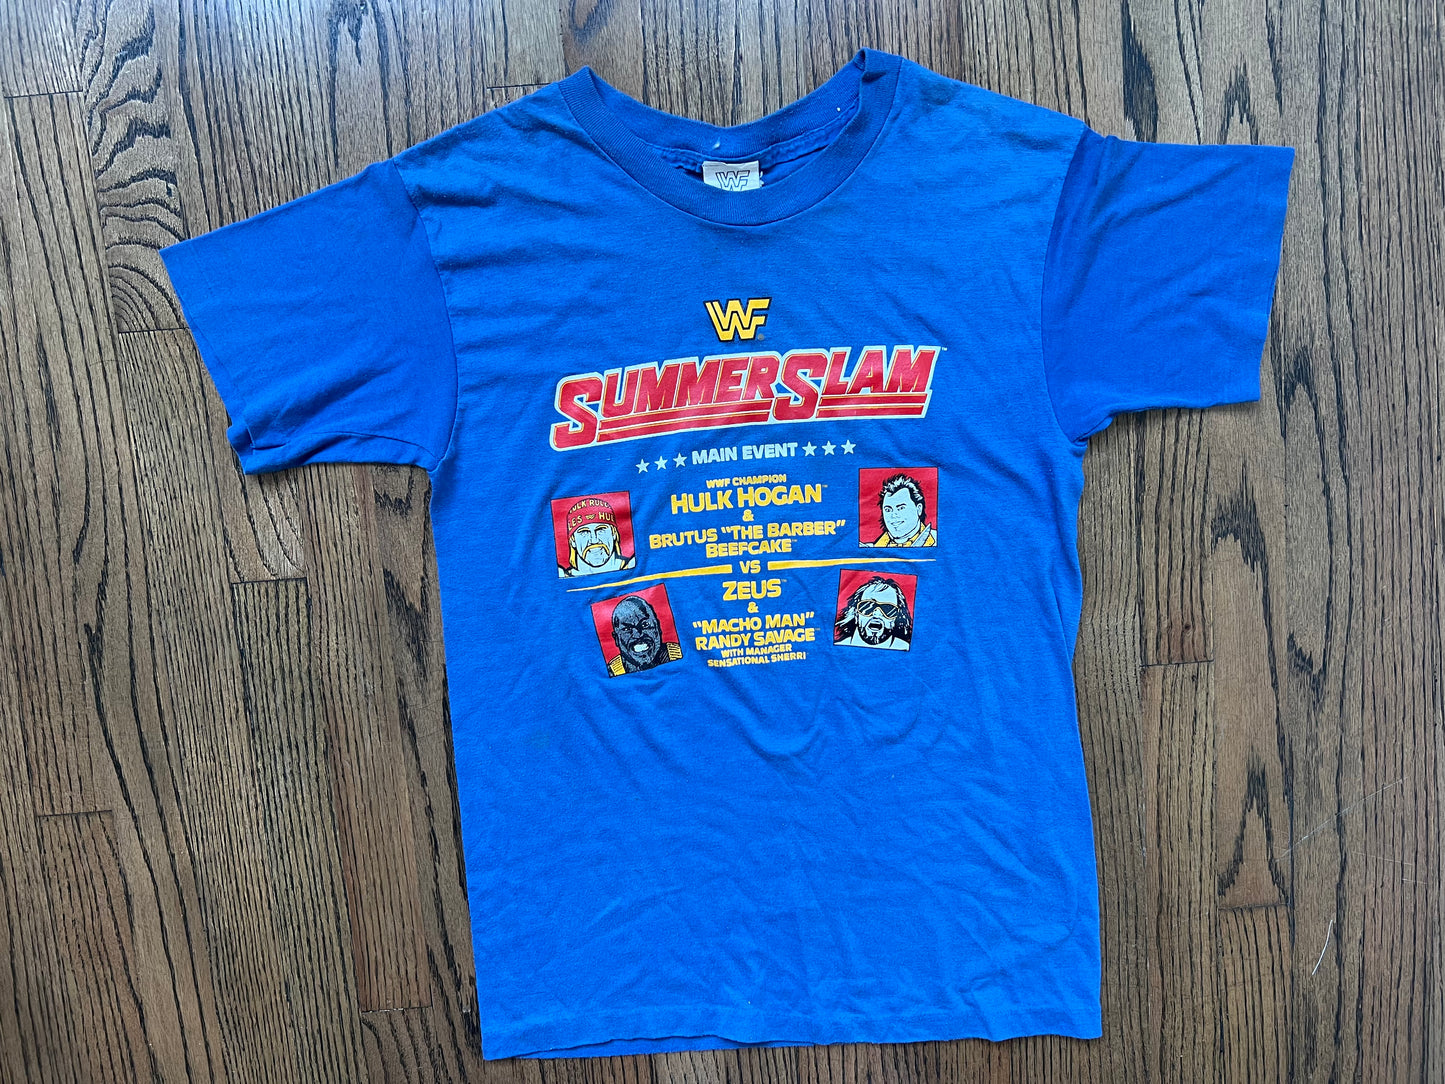 1989 WWF Summerslam two sided shirt featuring “The Human Wrecking Machine” Zeus, “Macho Man” Randy Savage, Hulk Hogan and Brutus “The Barber” Beefcake